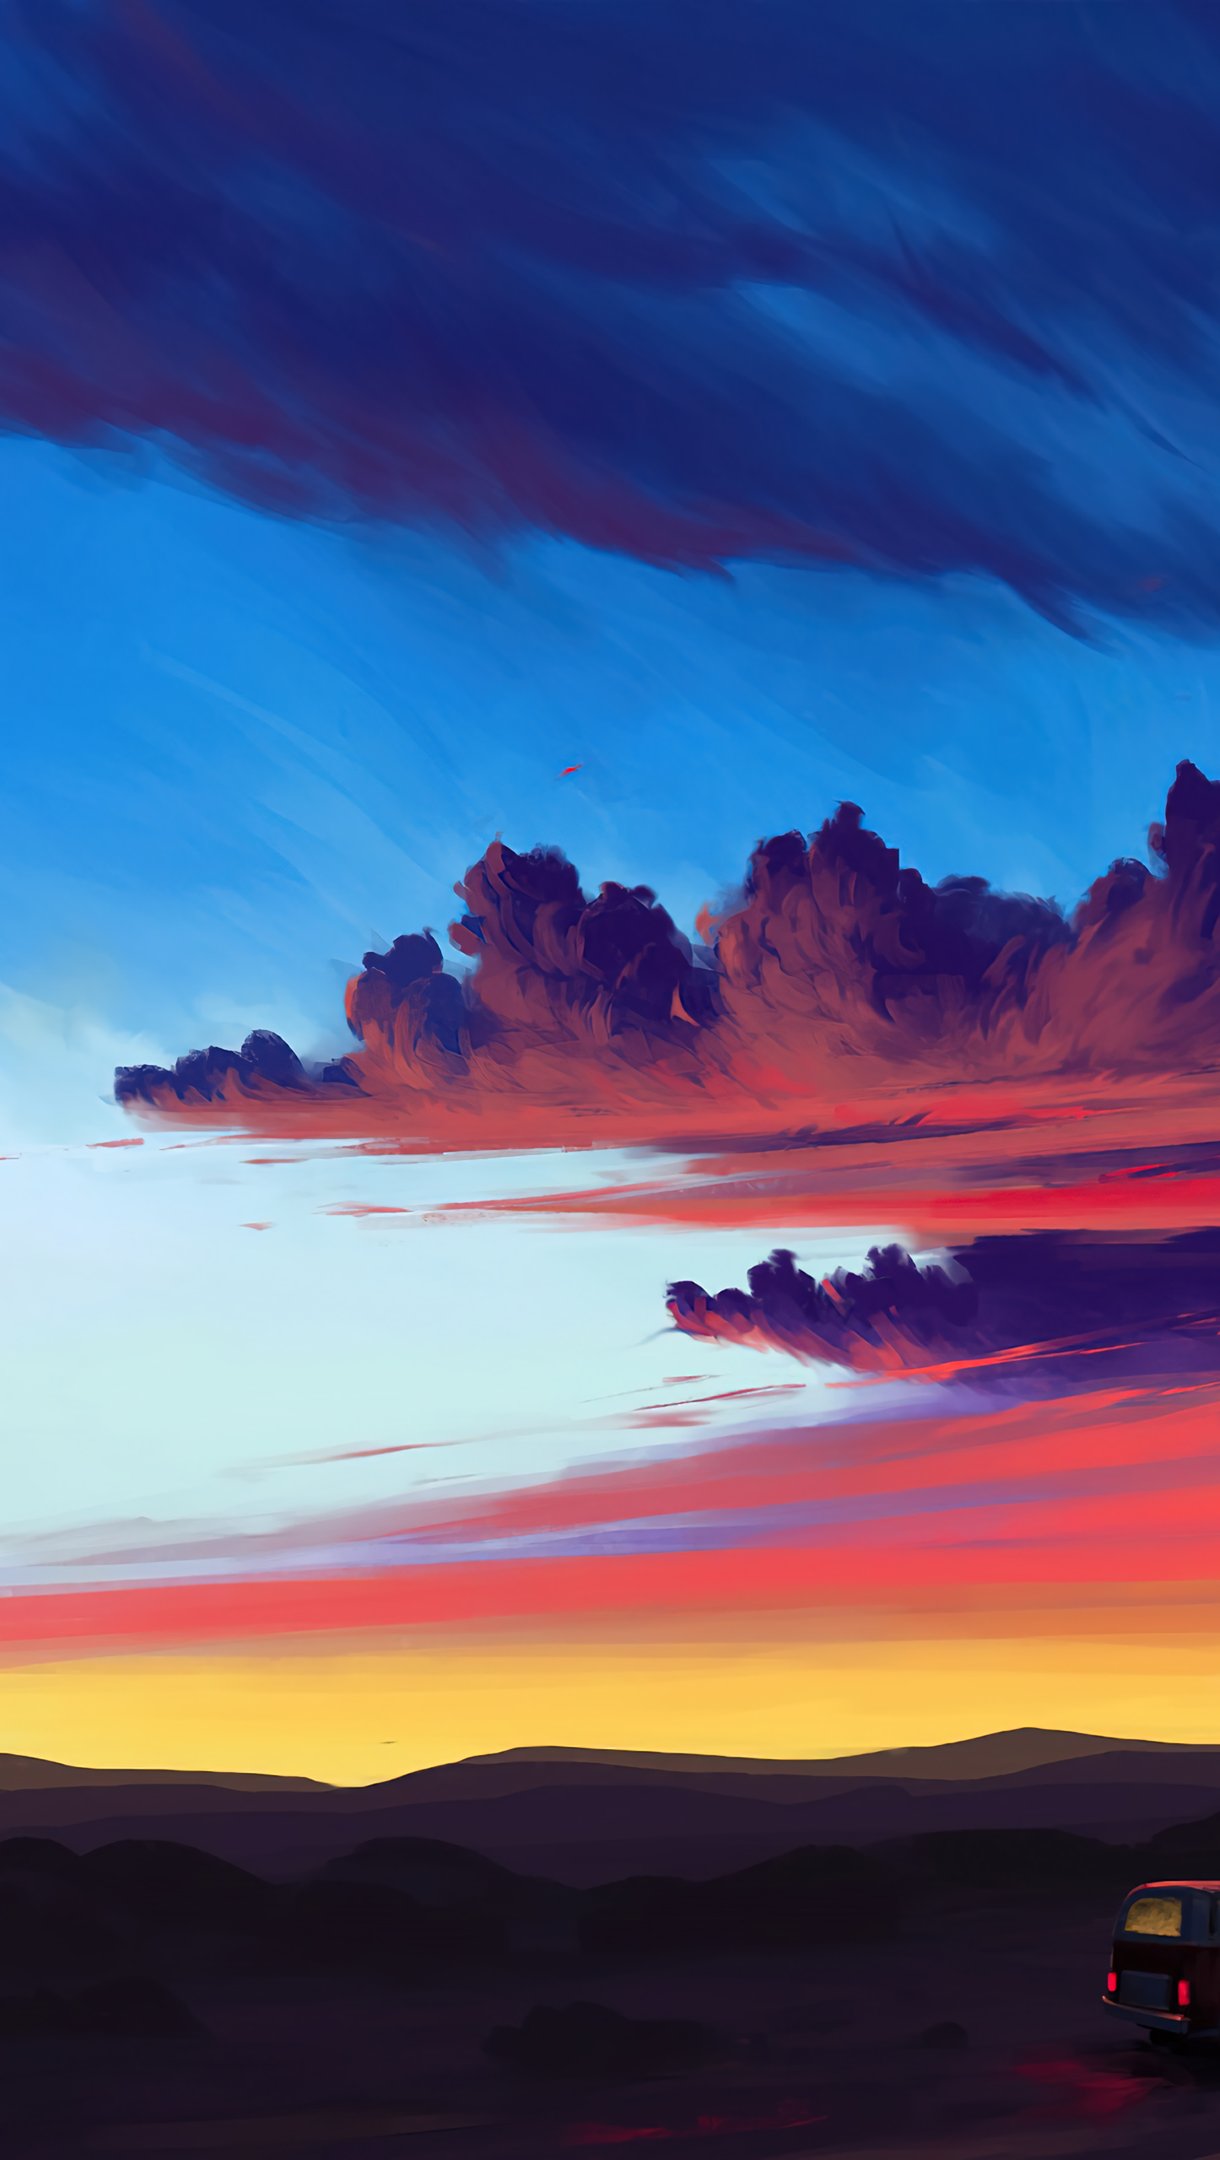 Clouds at sunrise Digital Art Wallpaper 4k Ultra HD